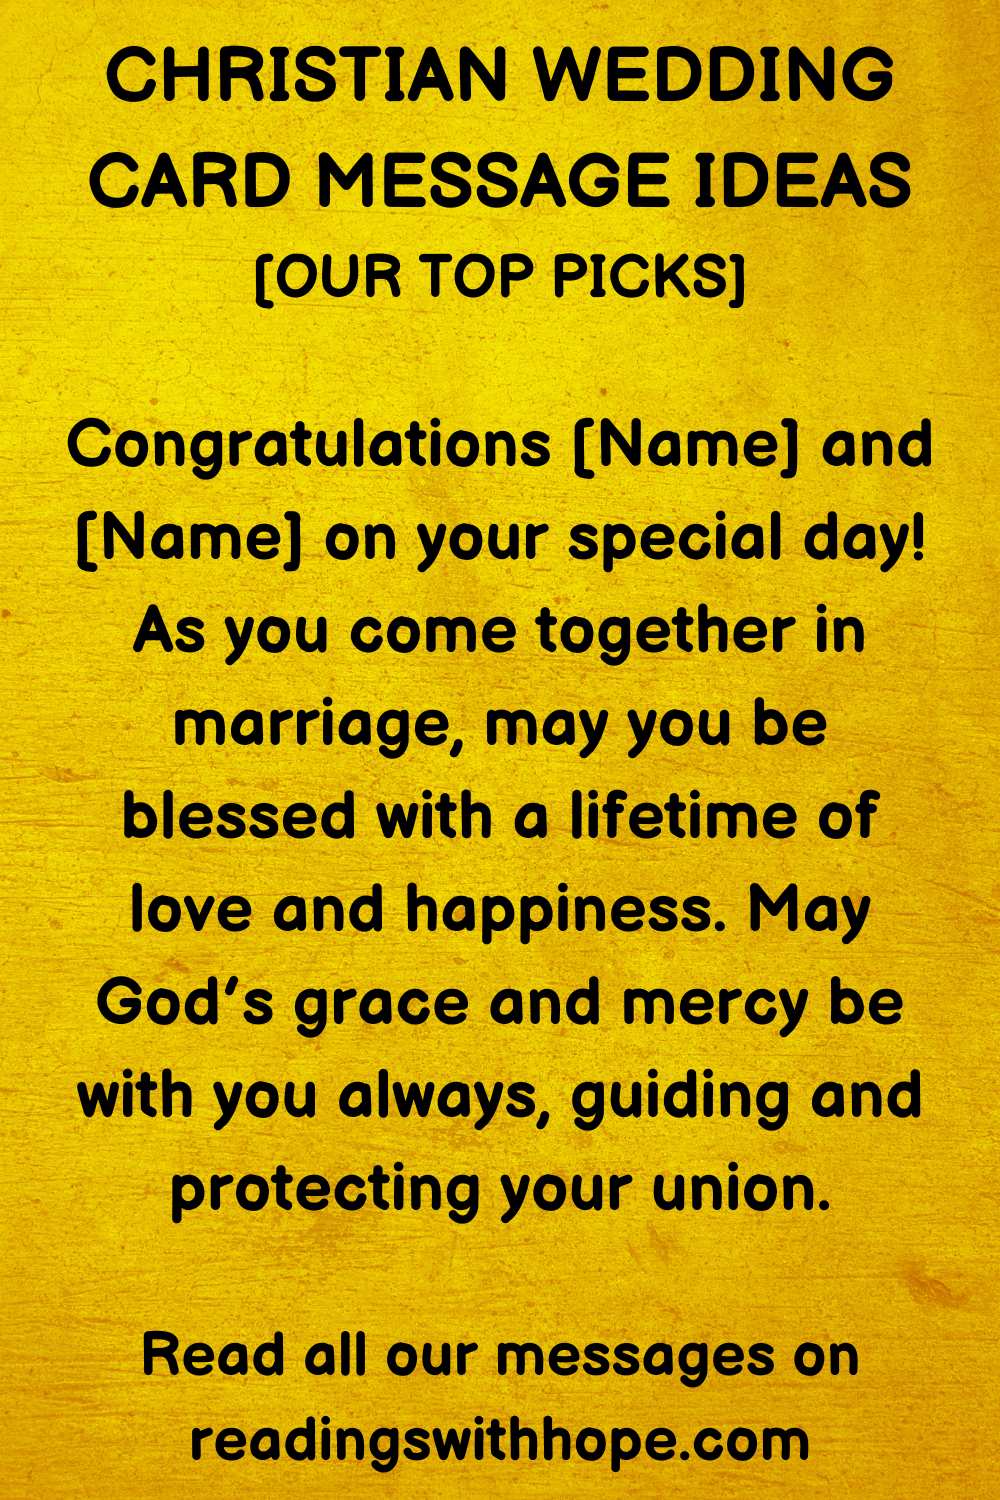 Christian Wedding Card Message Ideas